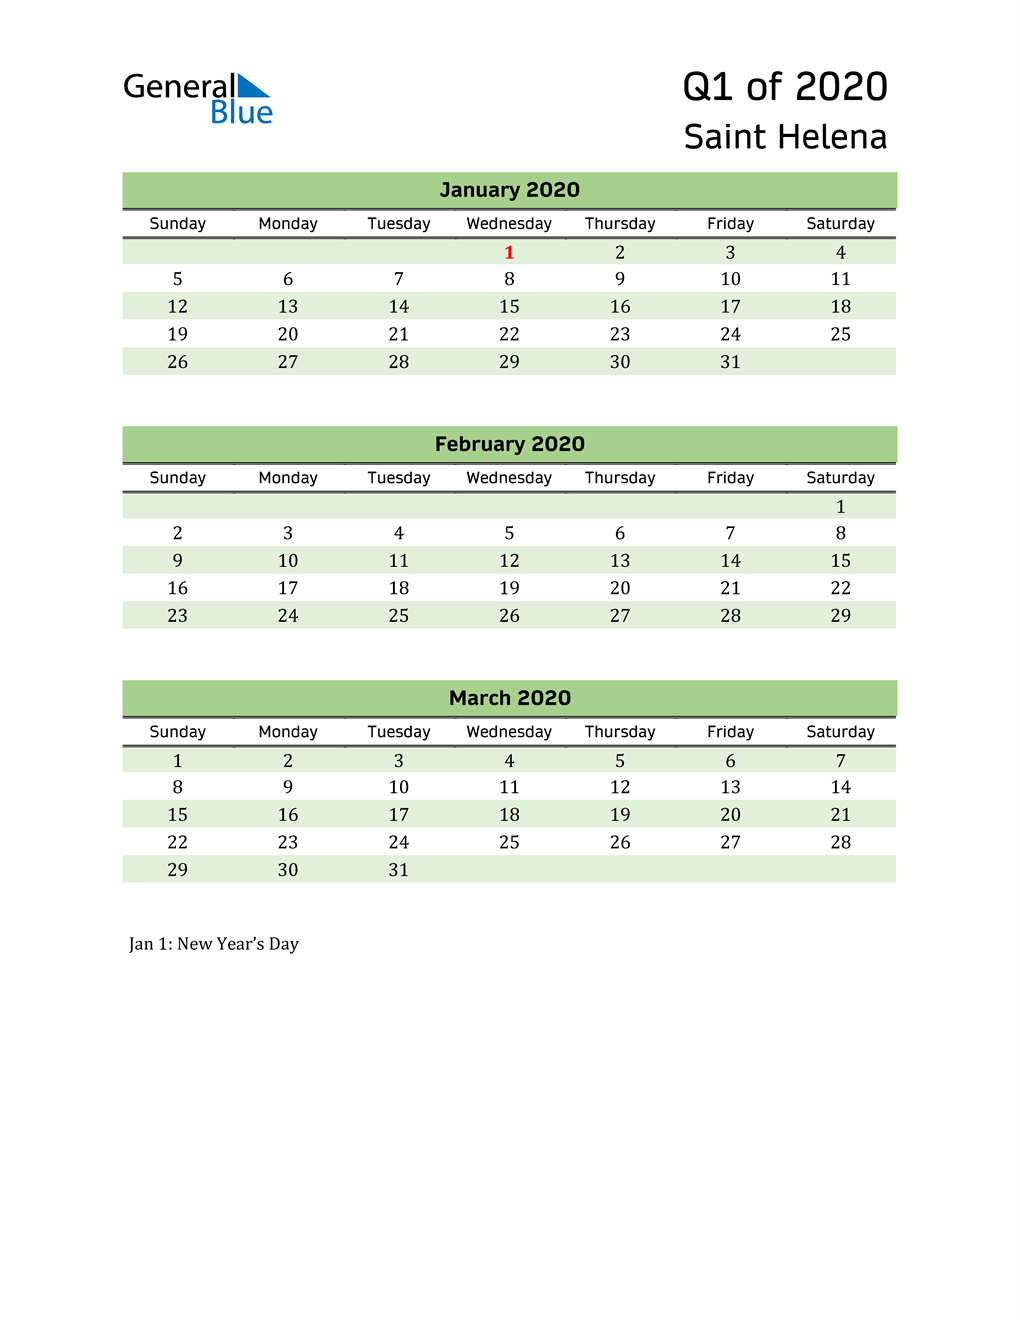  Quarterly Calendar 2020 with Saint Helena Holidays 